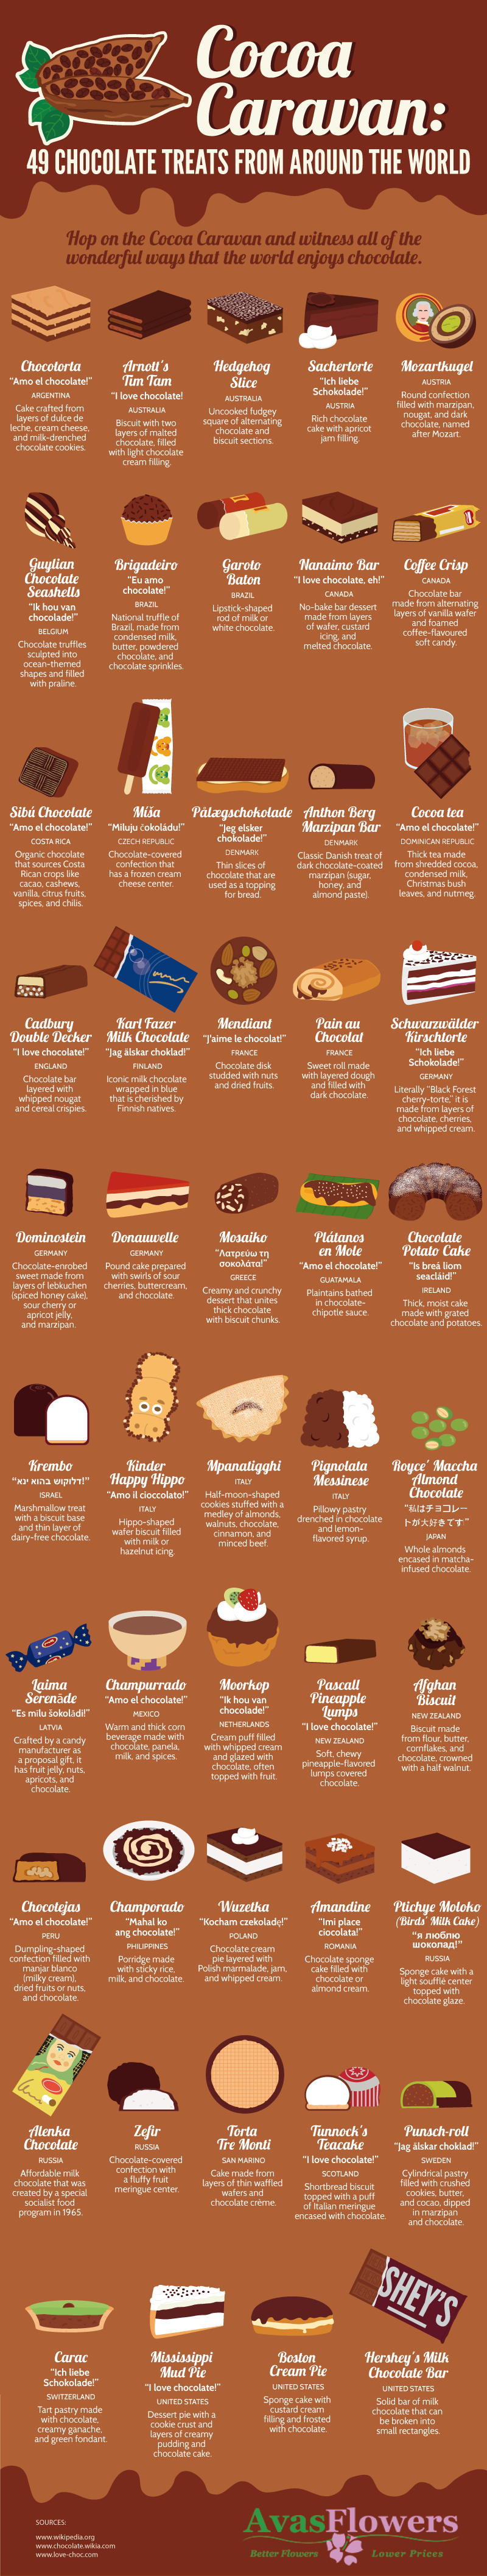 Cocoa Caravan: 49 Chocolate Treats from Around the World -Avasflowers.net - Infographic